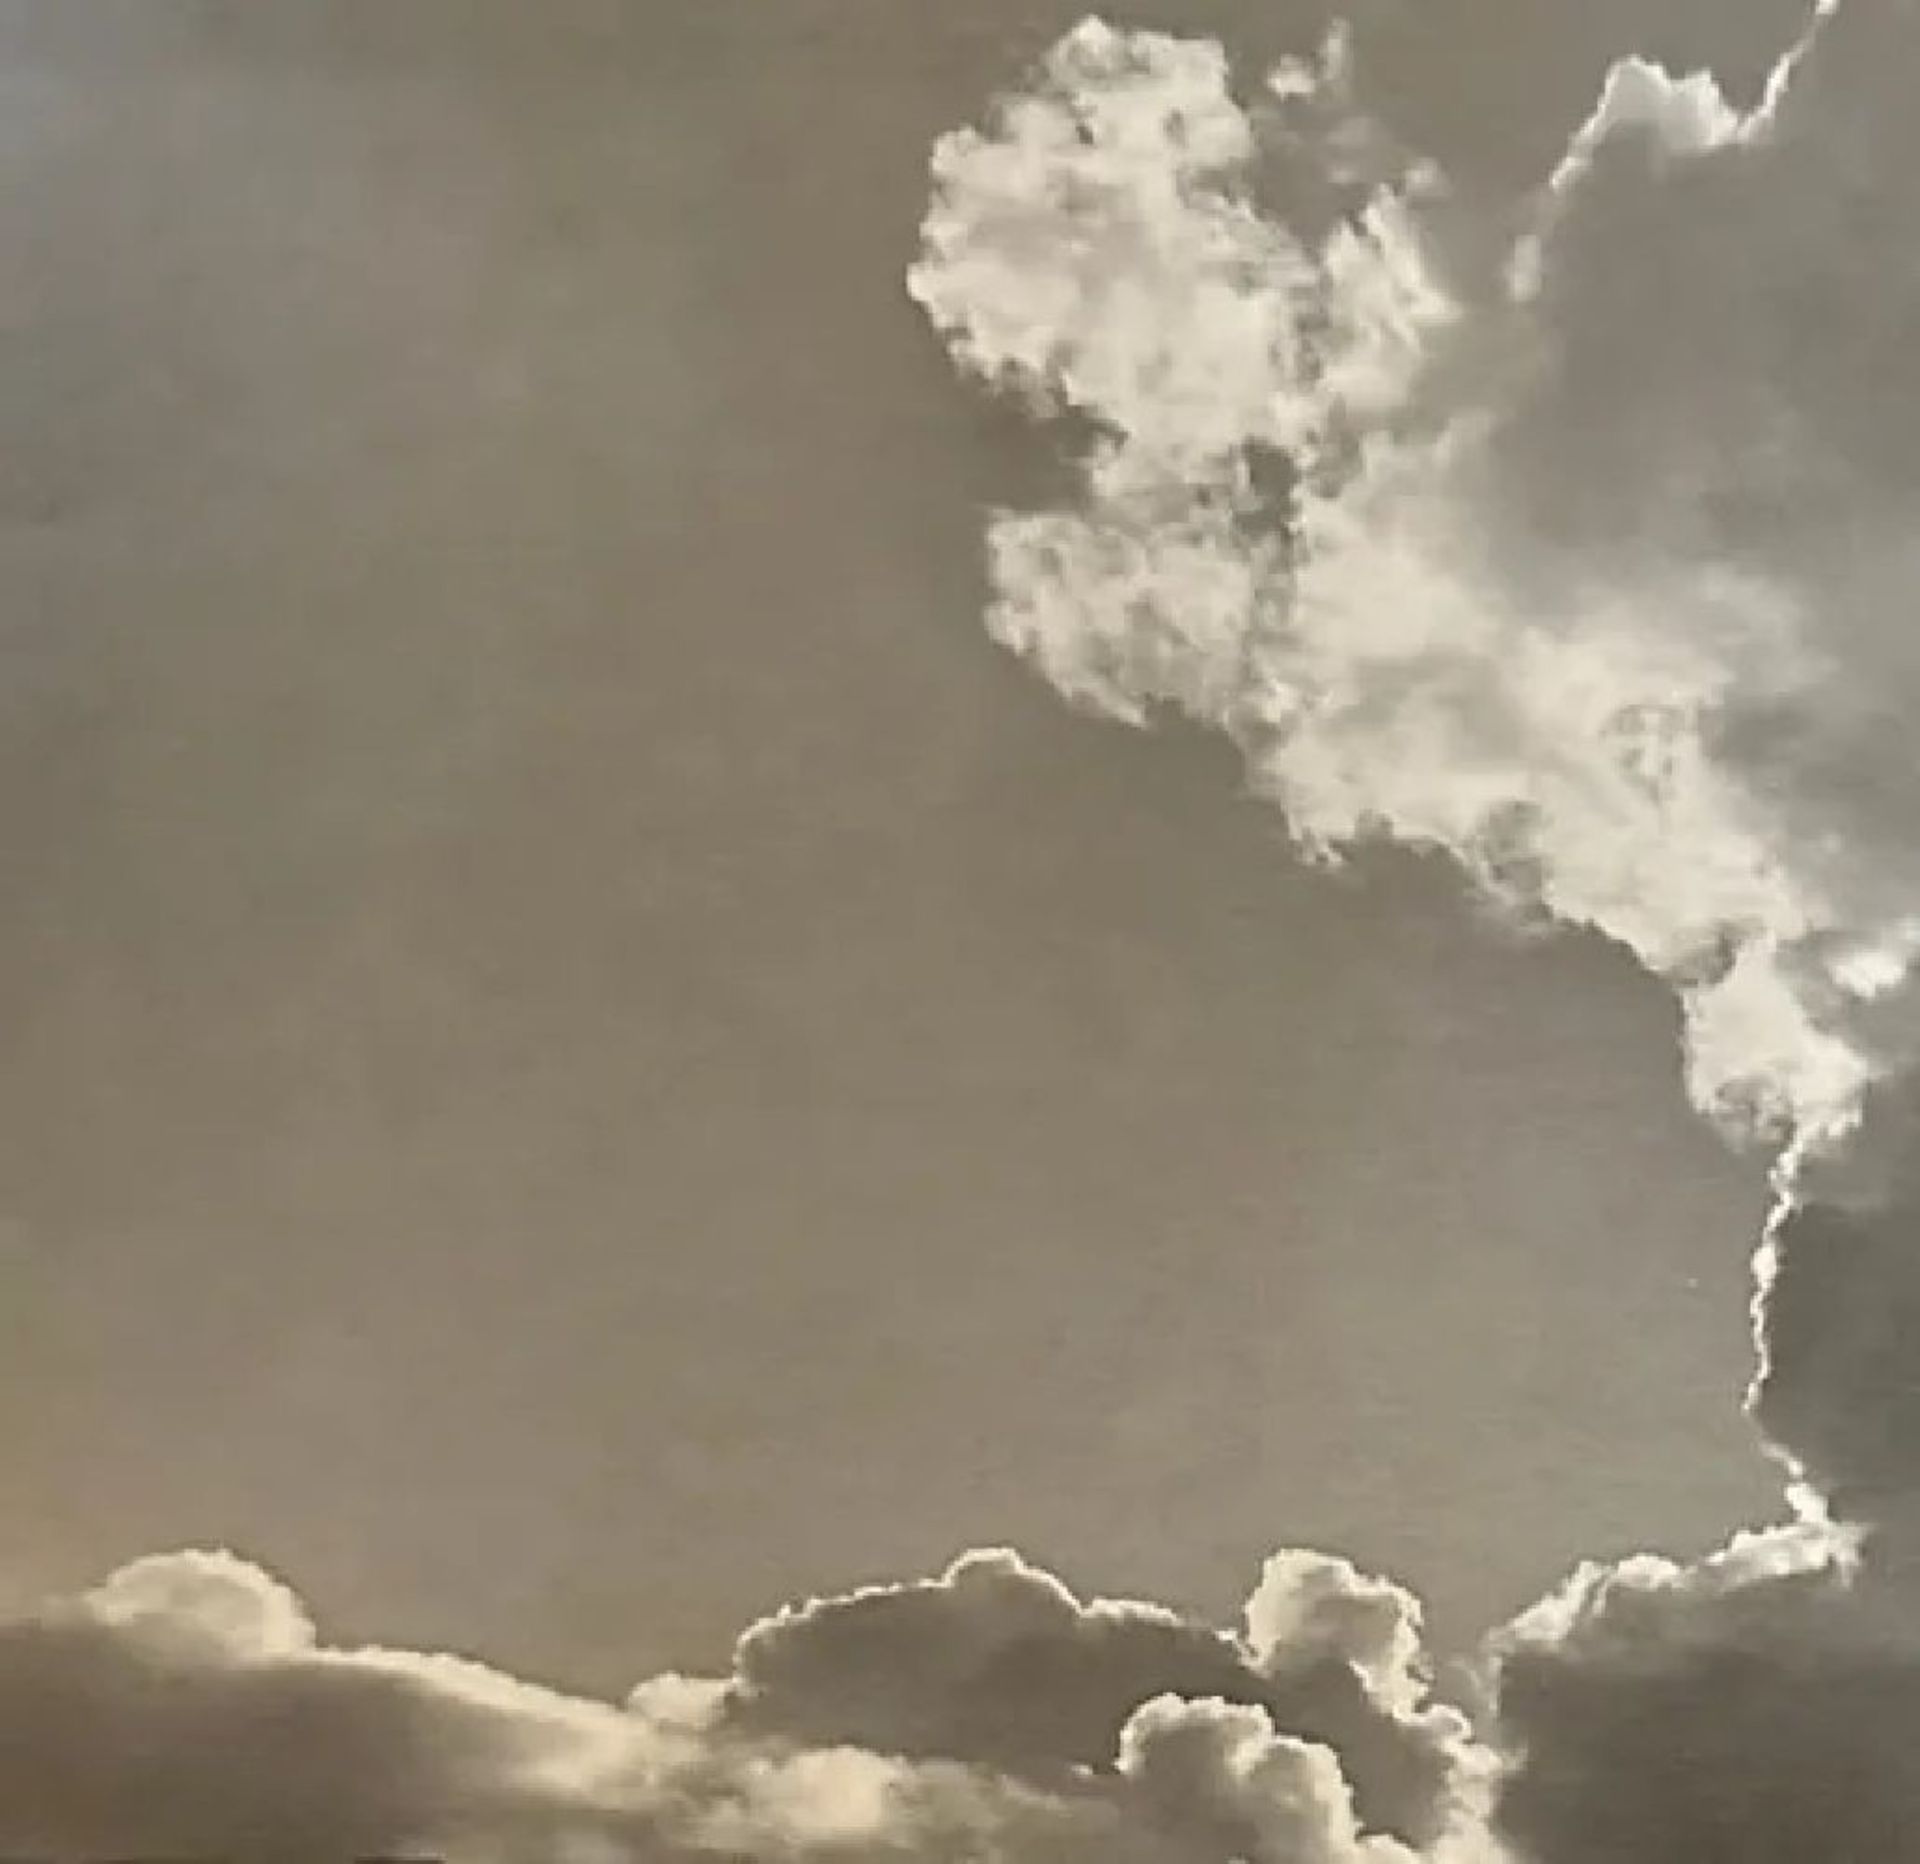 Ansel Adams "Evening Cloud" Print - Image 4 of 6